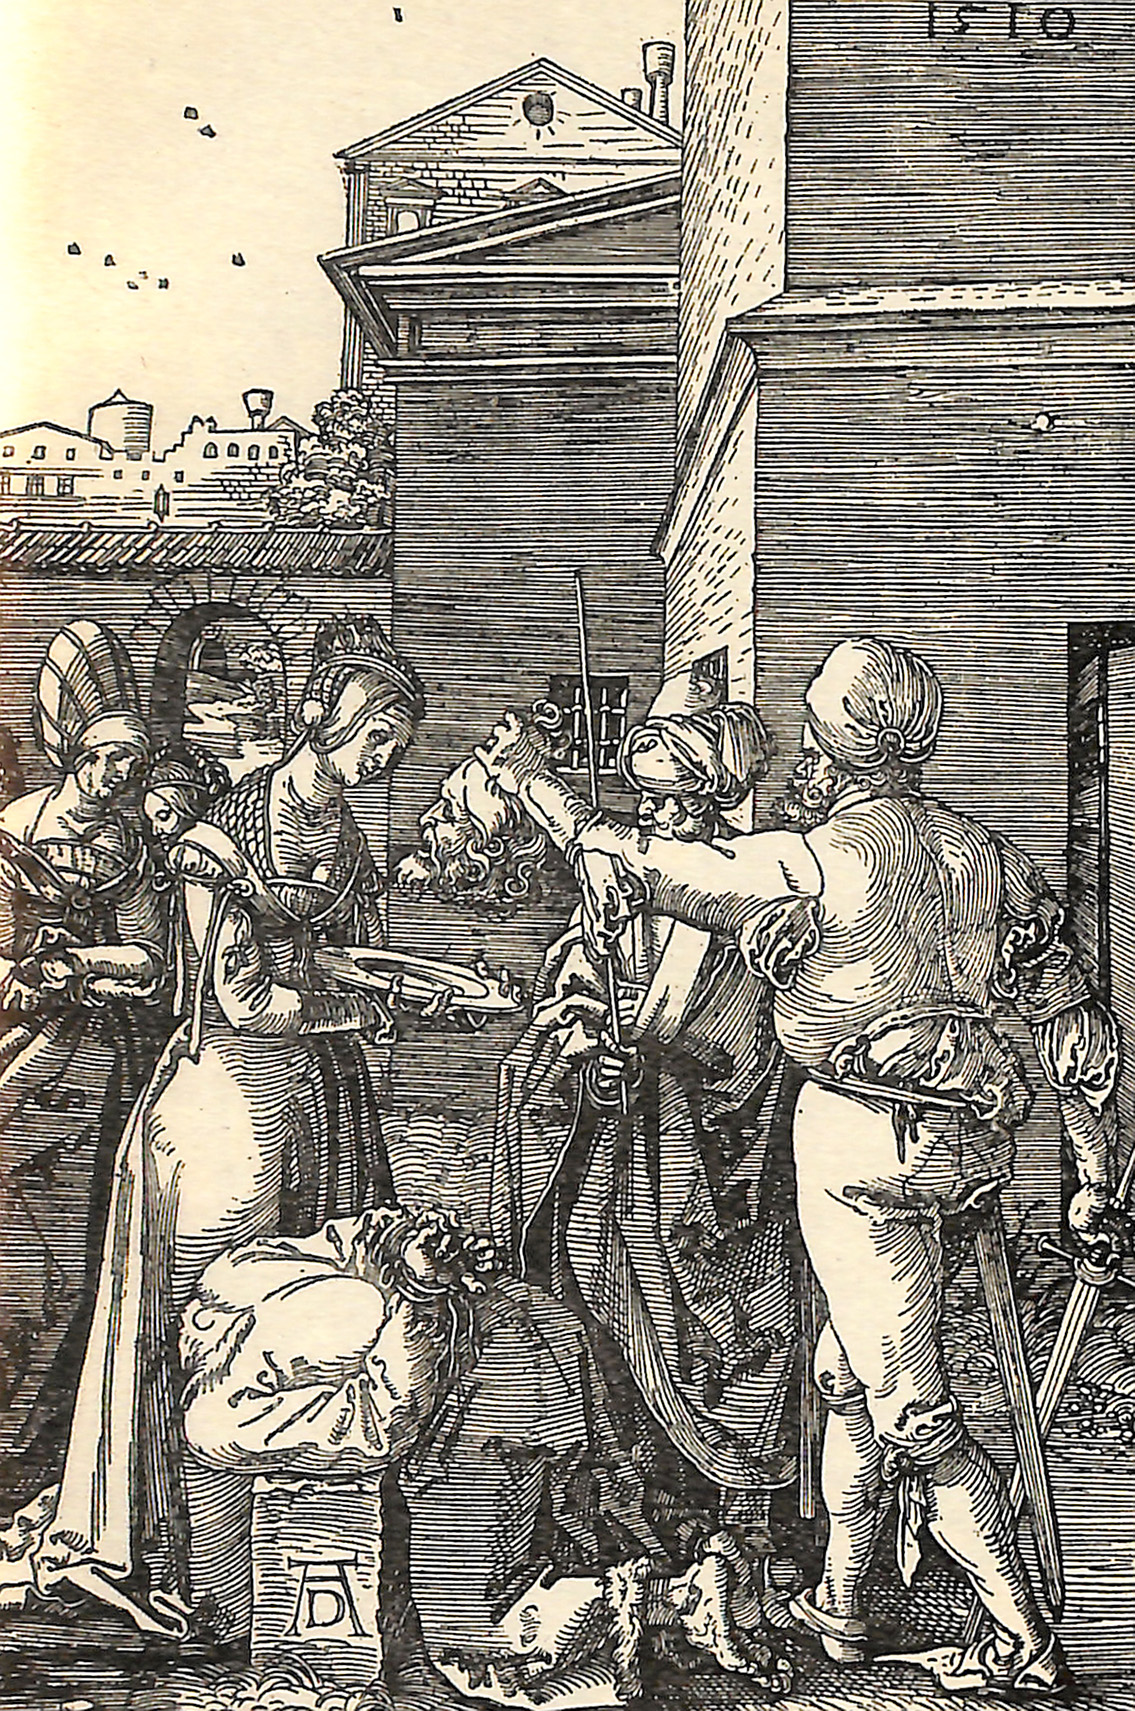 The Beheading of St. John